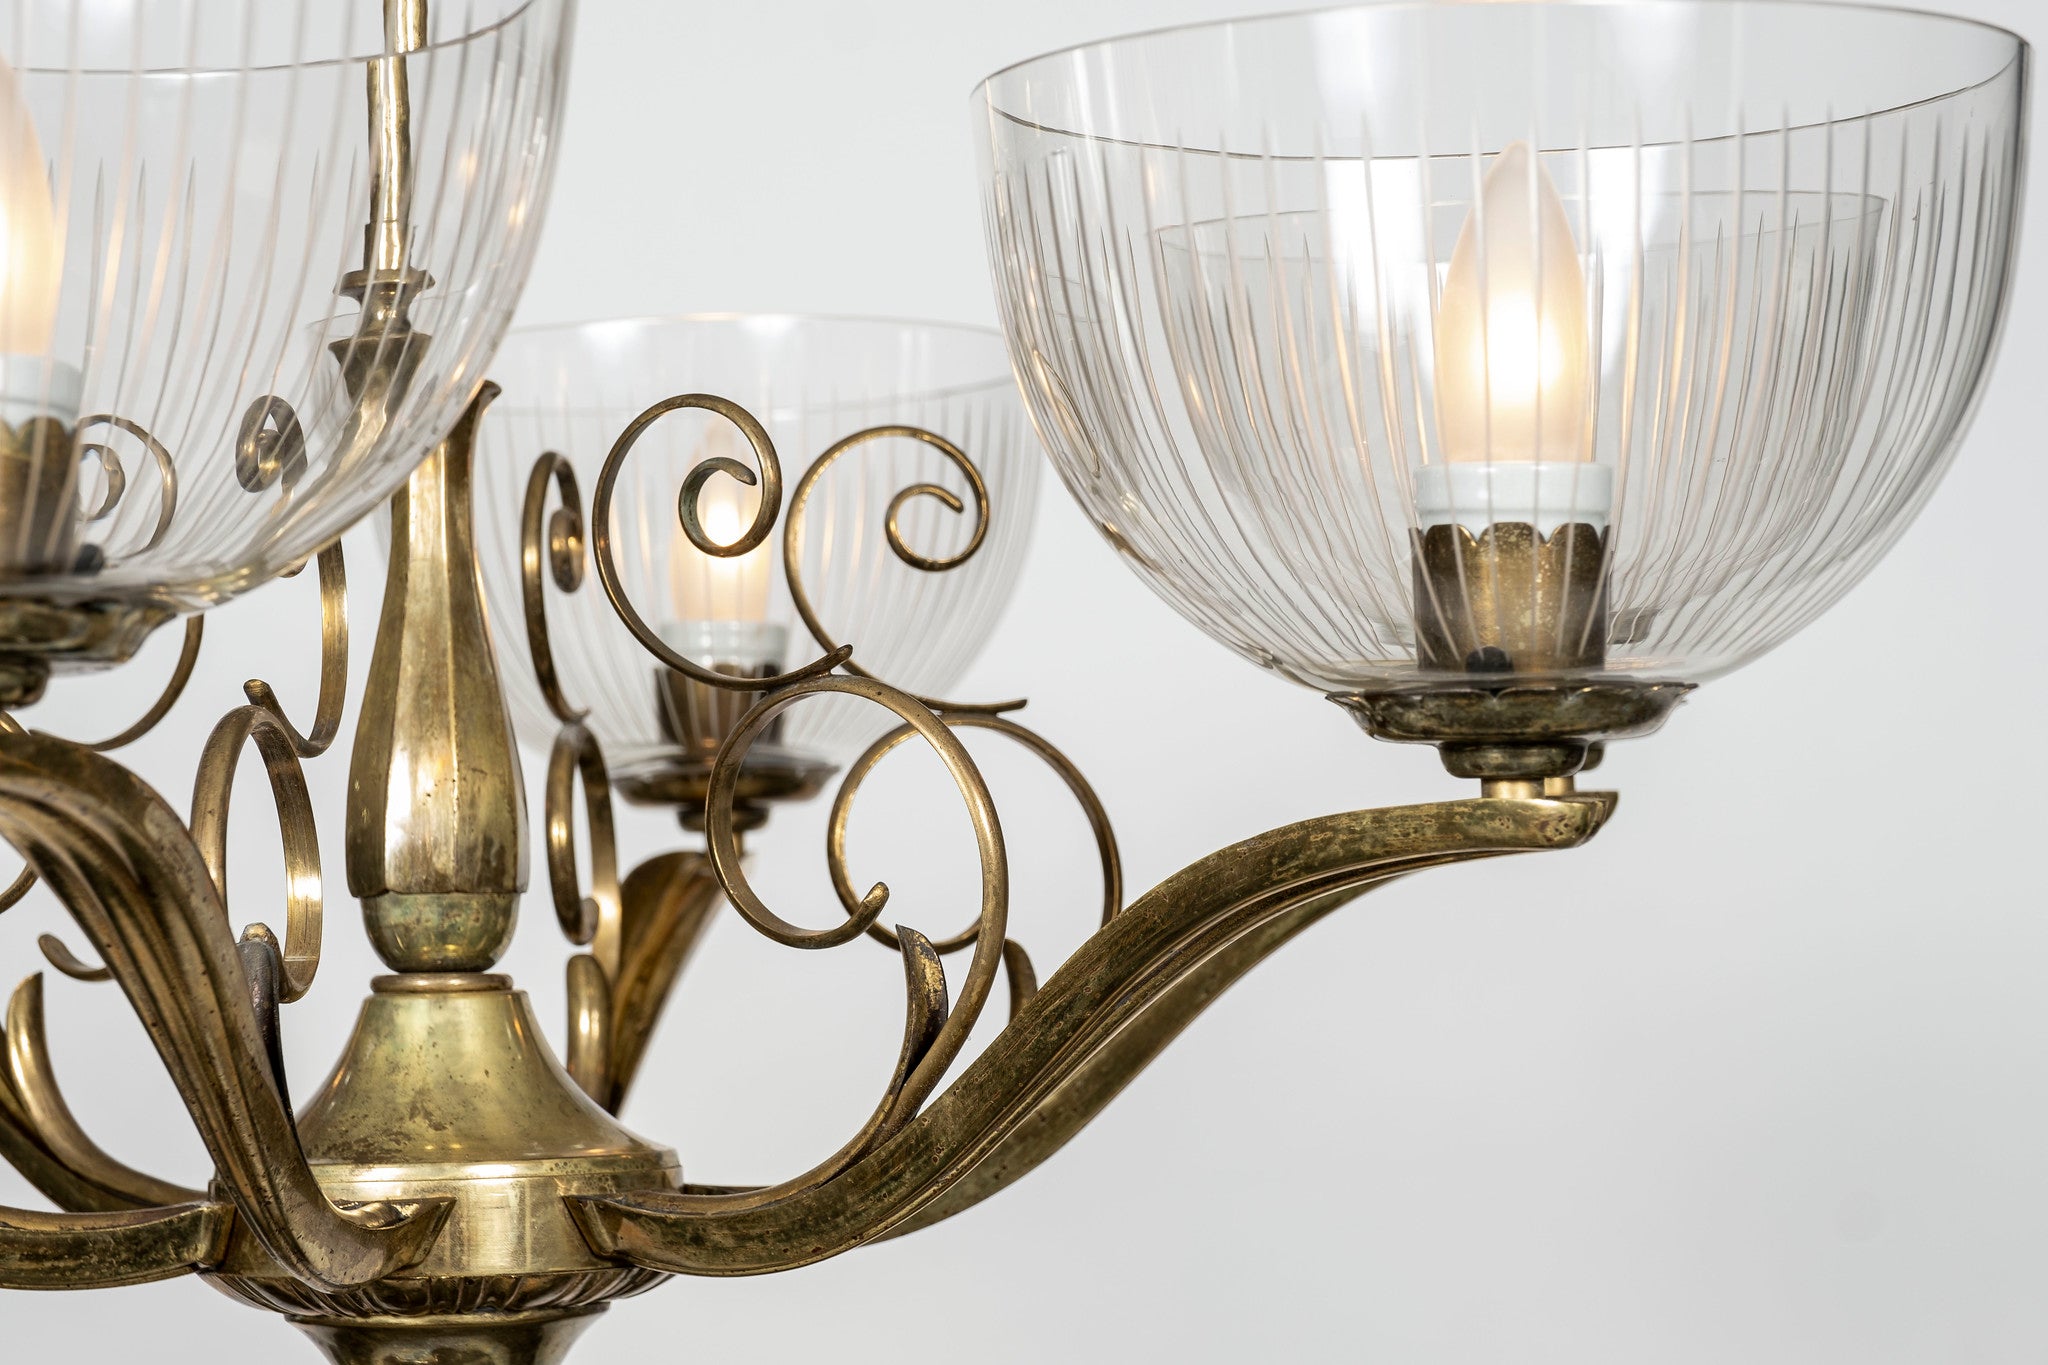 St George Street glass and brass Italian chandeliers - Lighting